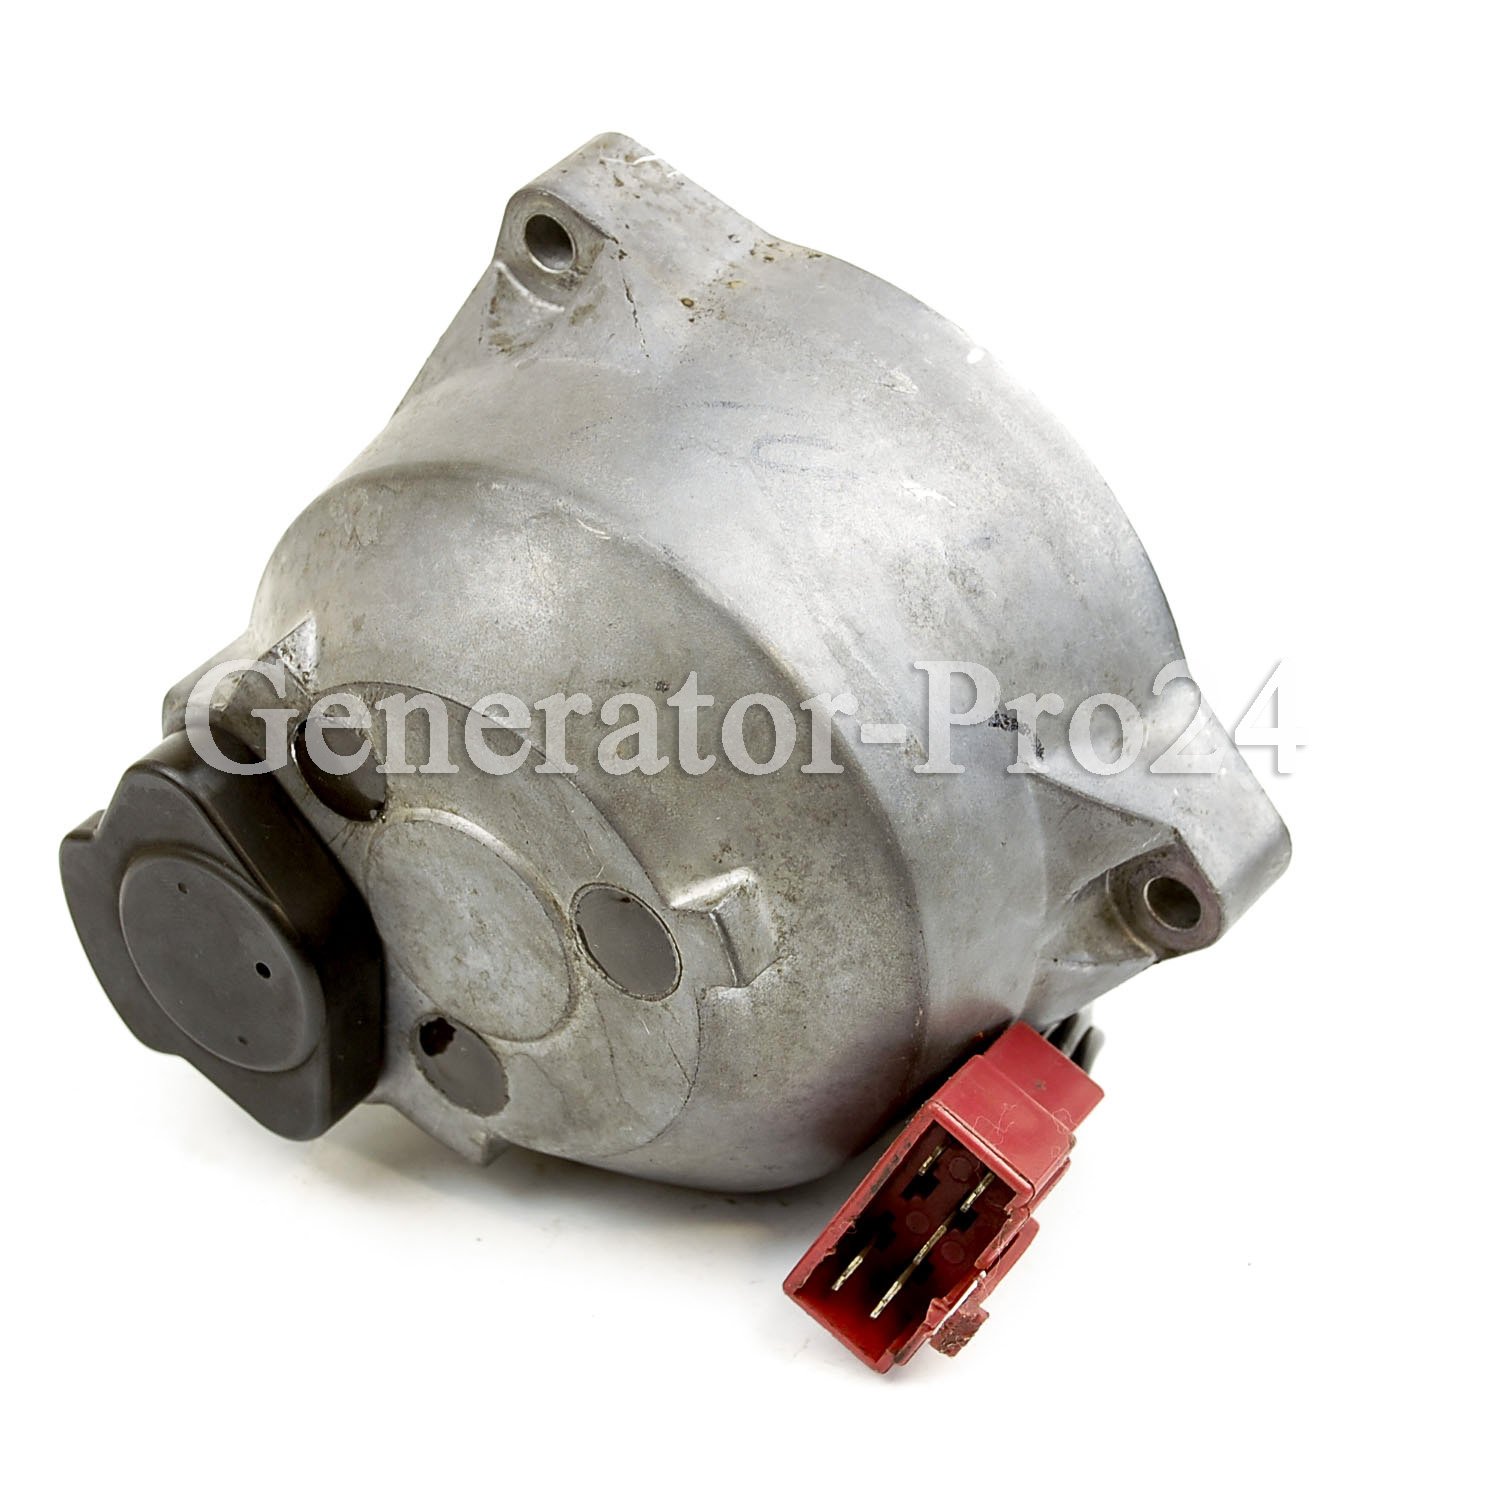 31130MS2611 HONDA  | Generator-Pro24  